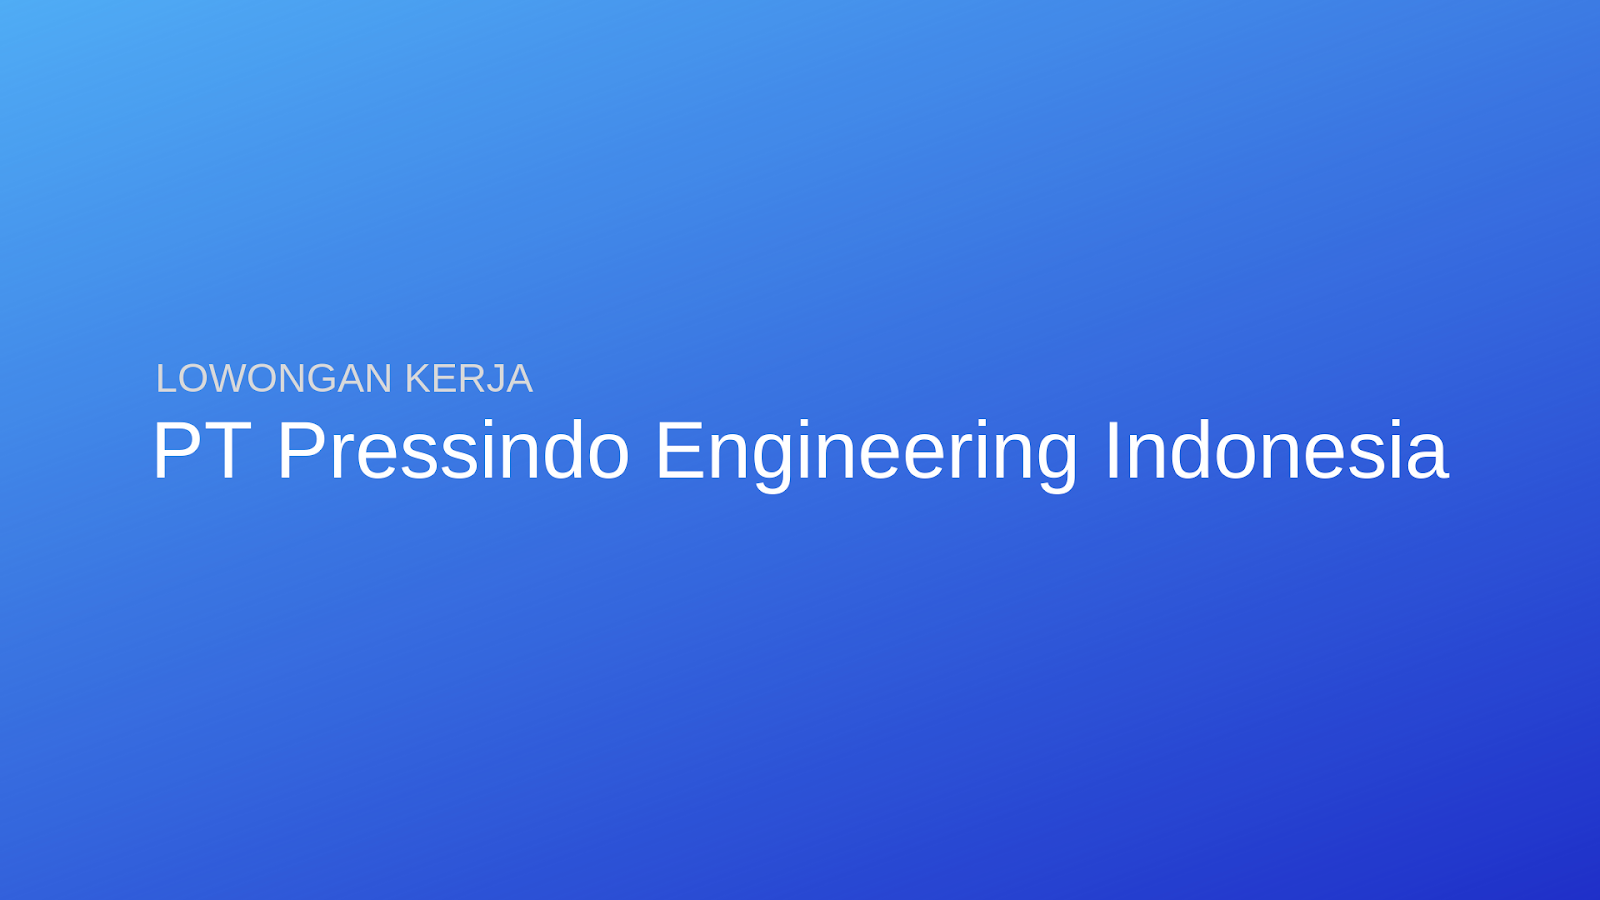 Lowongan Kerja PT Pressindo Engineering Indonesia 2020